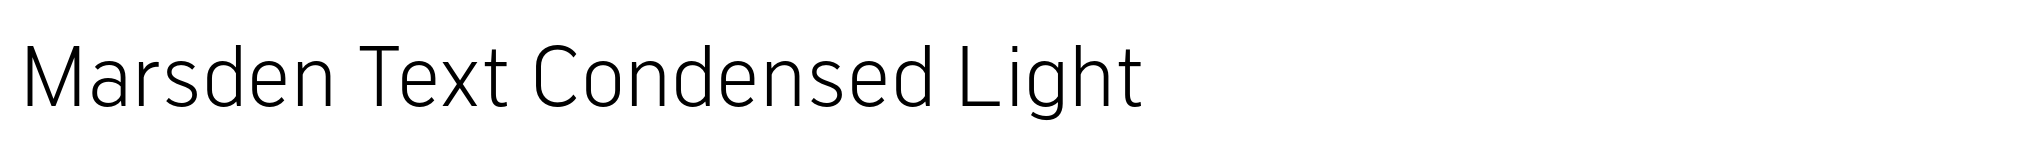 Marsden Text Condensed Light image